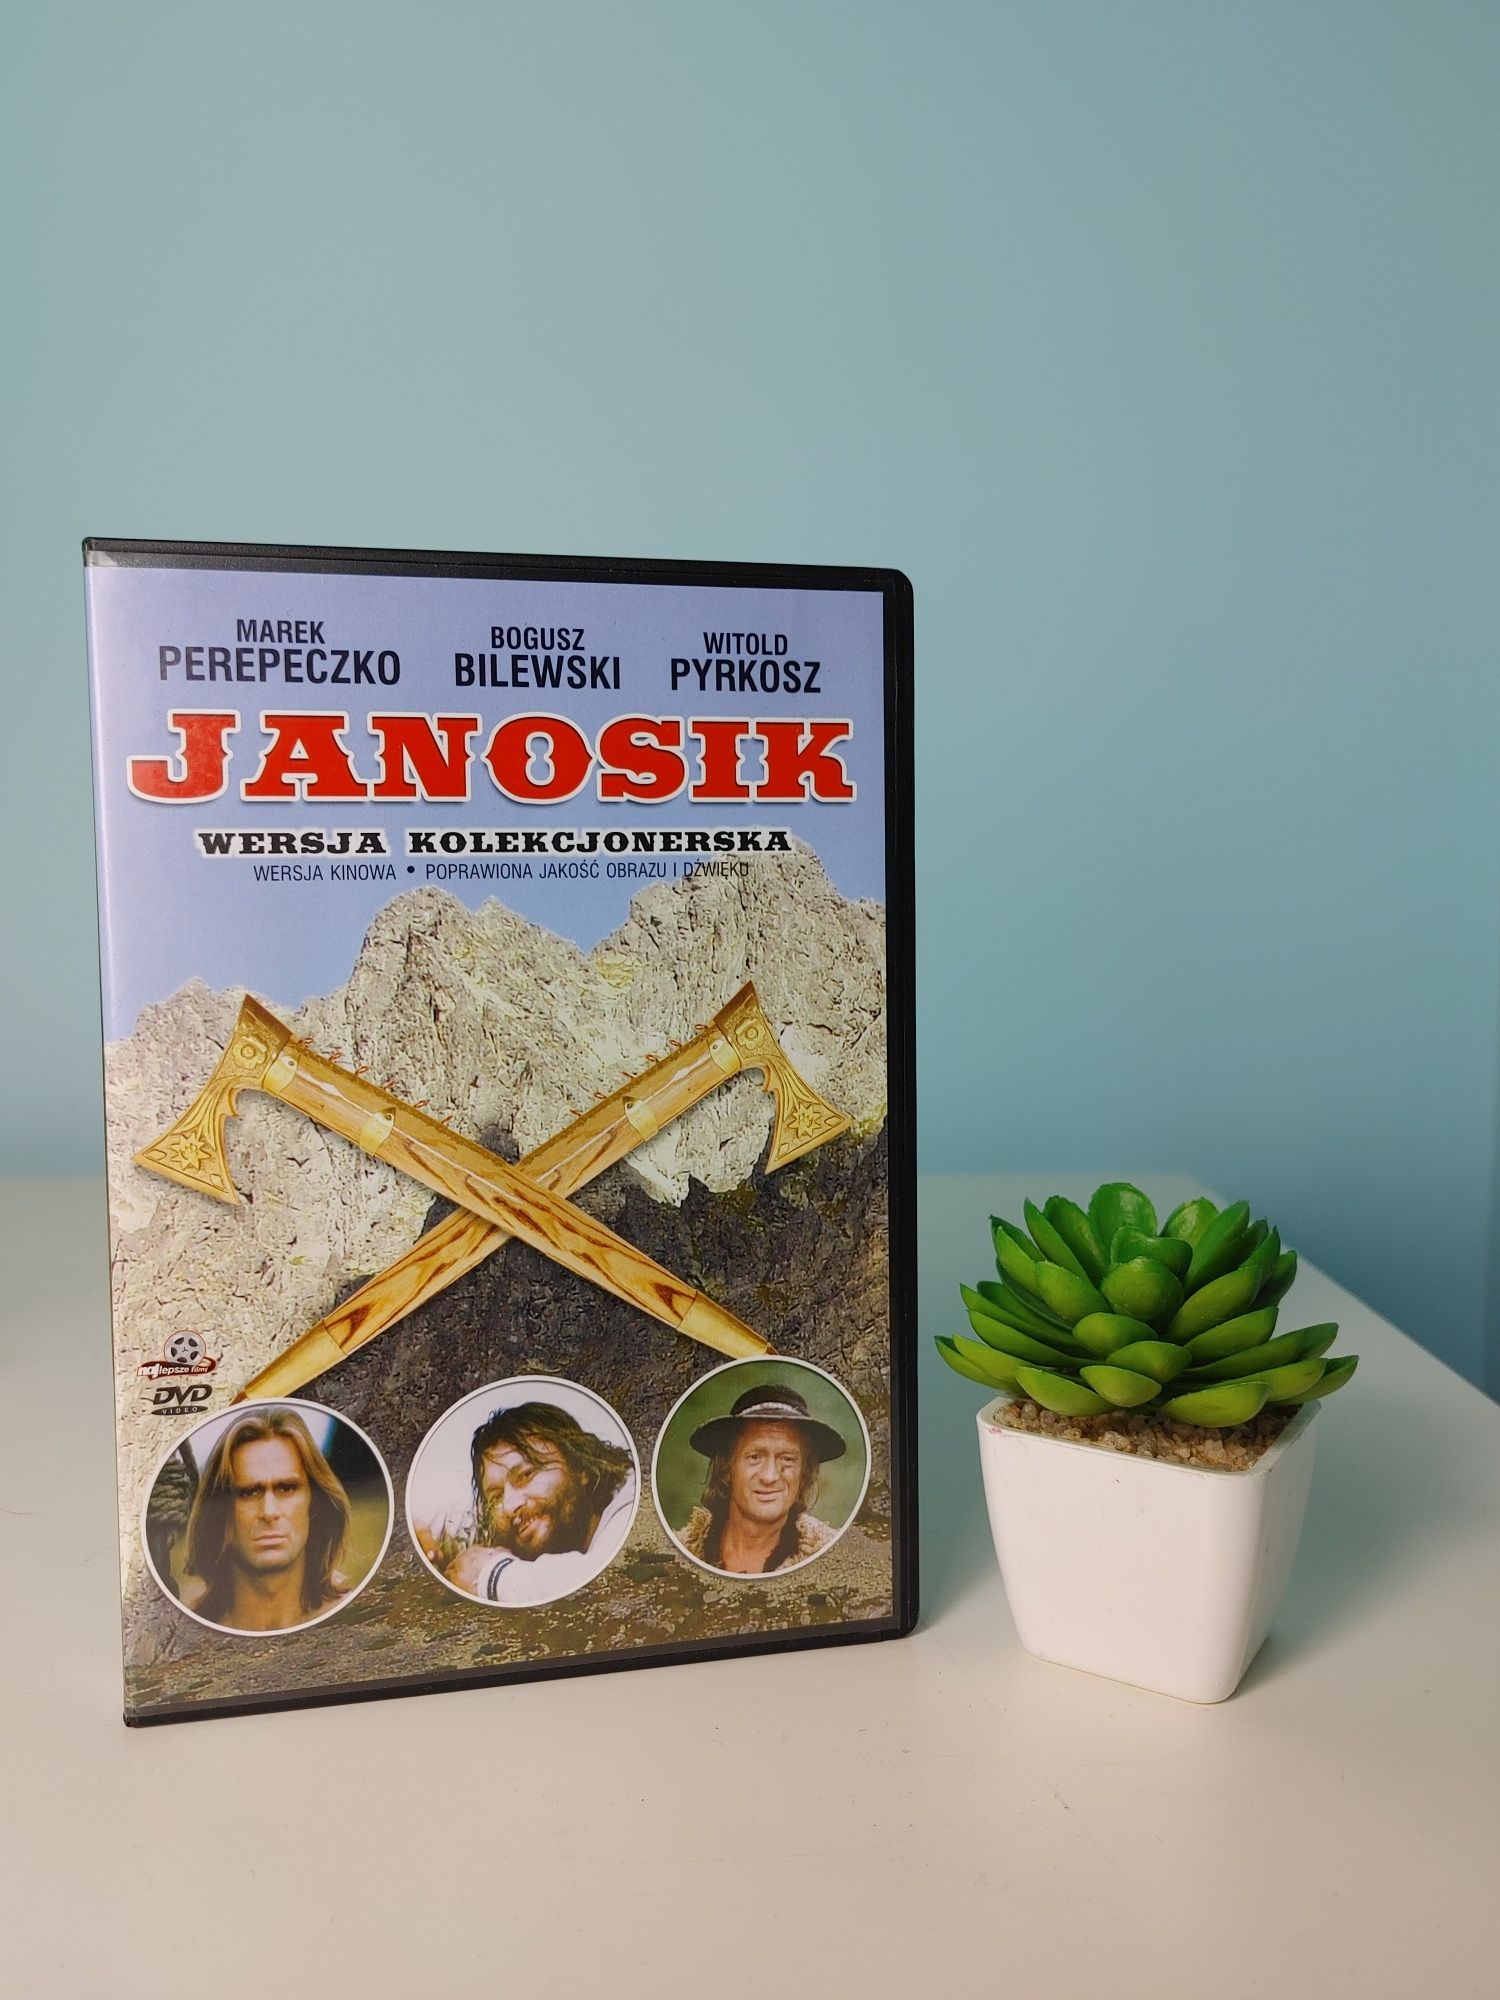 Janosik film dvd wersja kolekcjonerska Perepeczko Pasendorfer